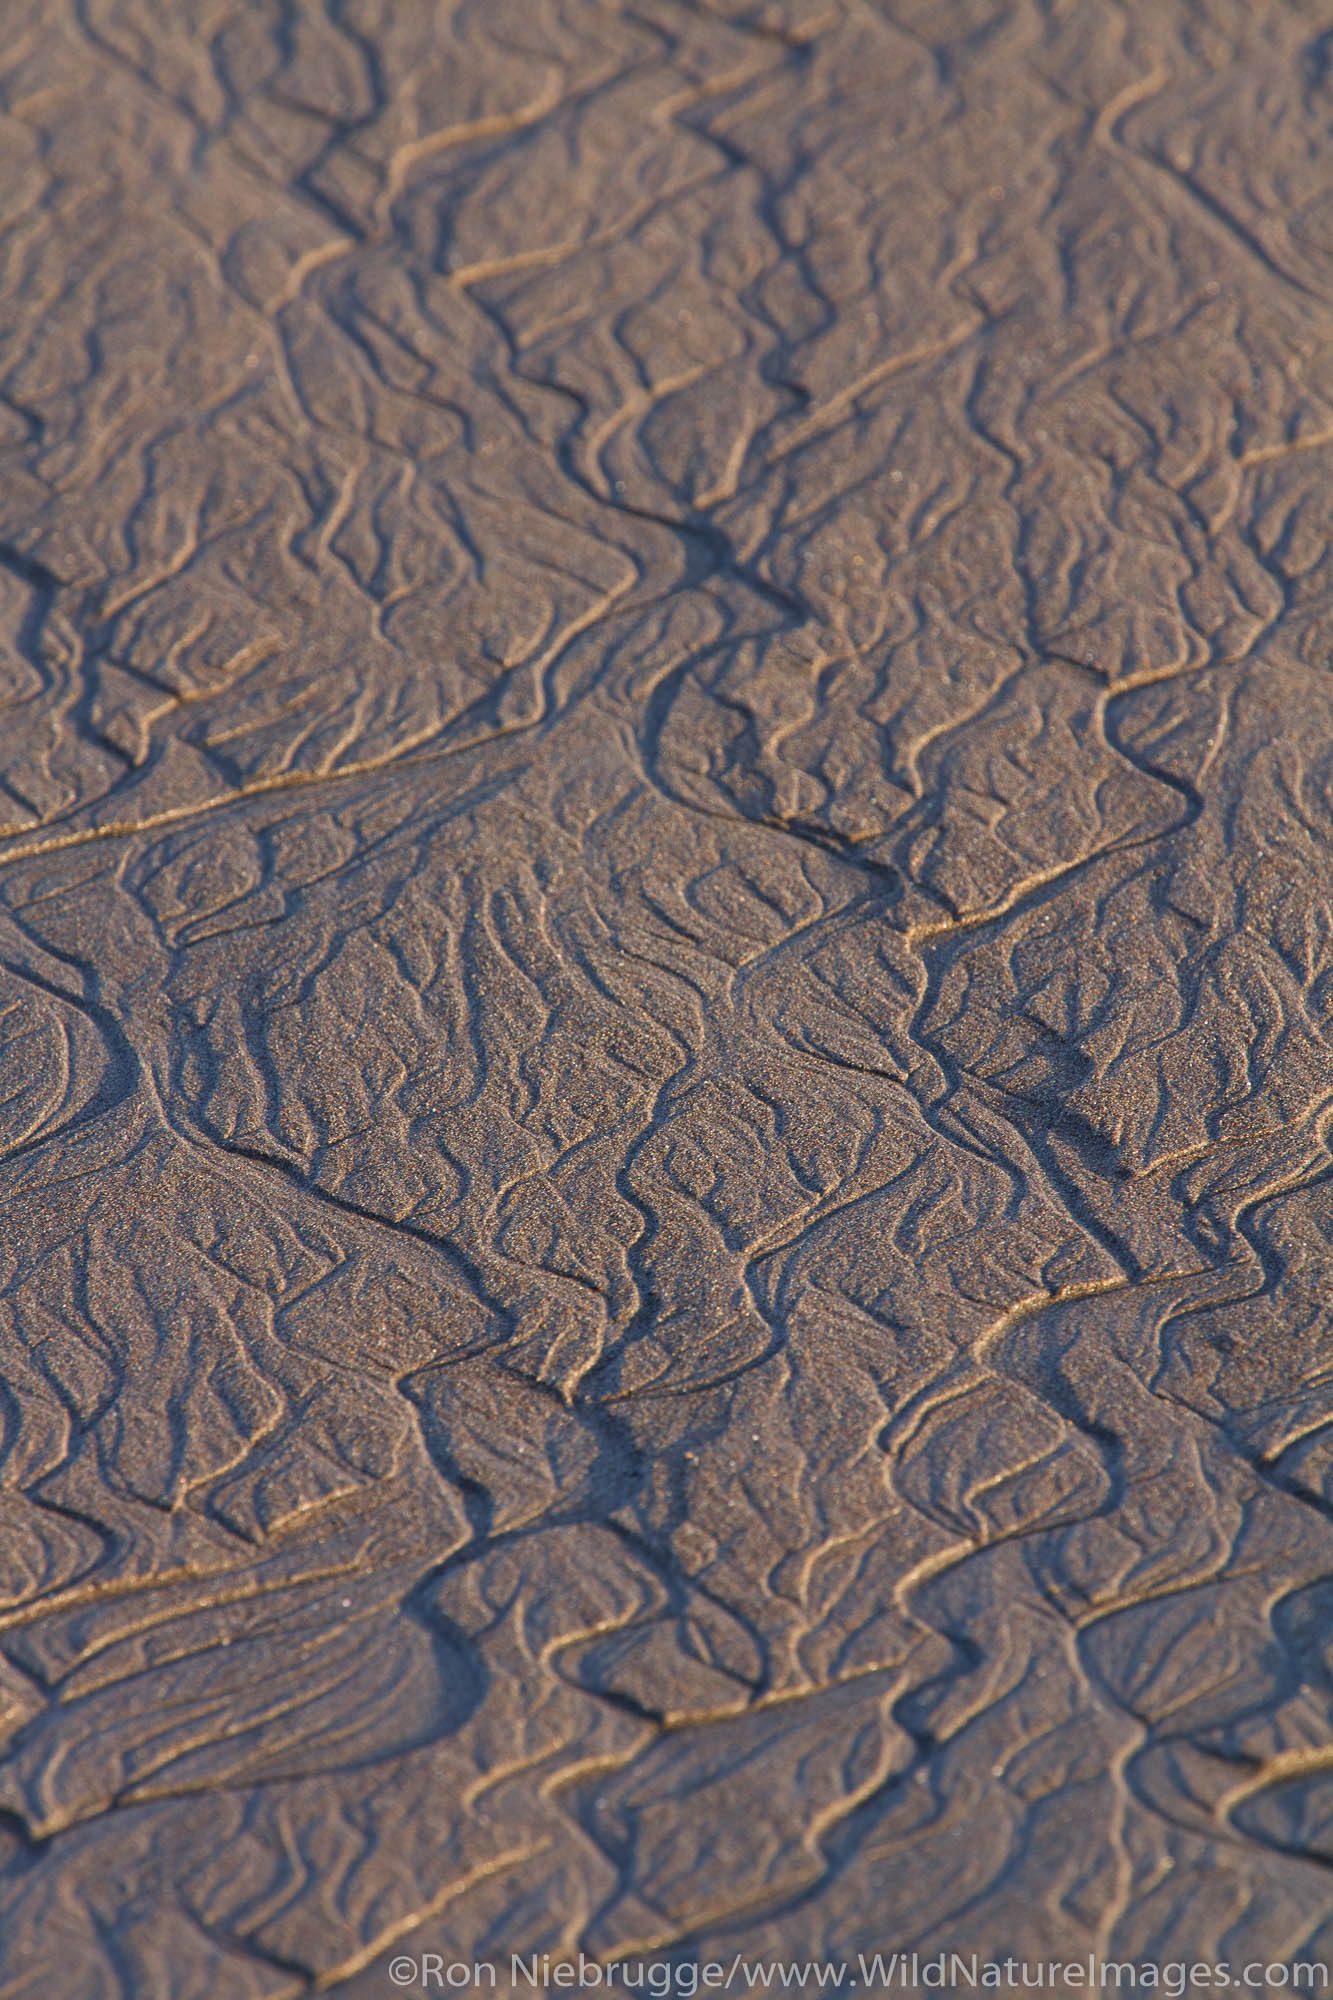 Sand Patterns, Lake Clark National Park, Alaska.